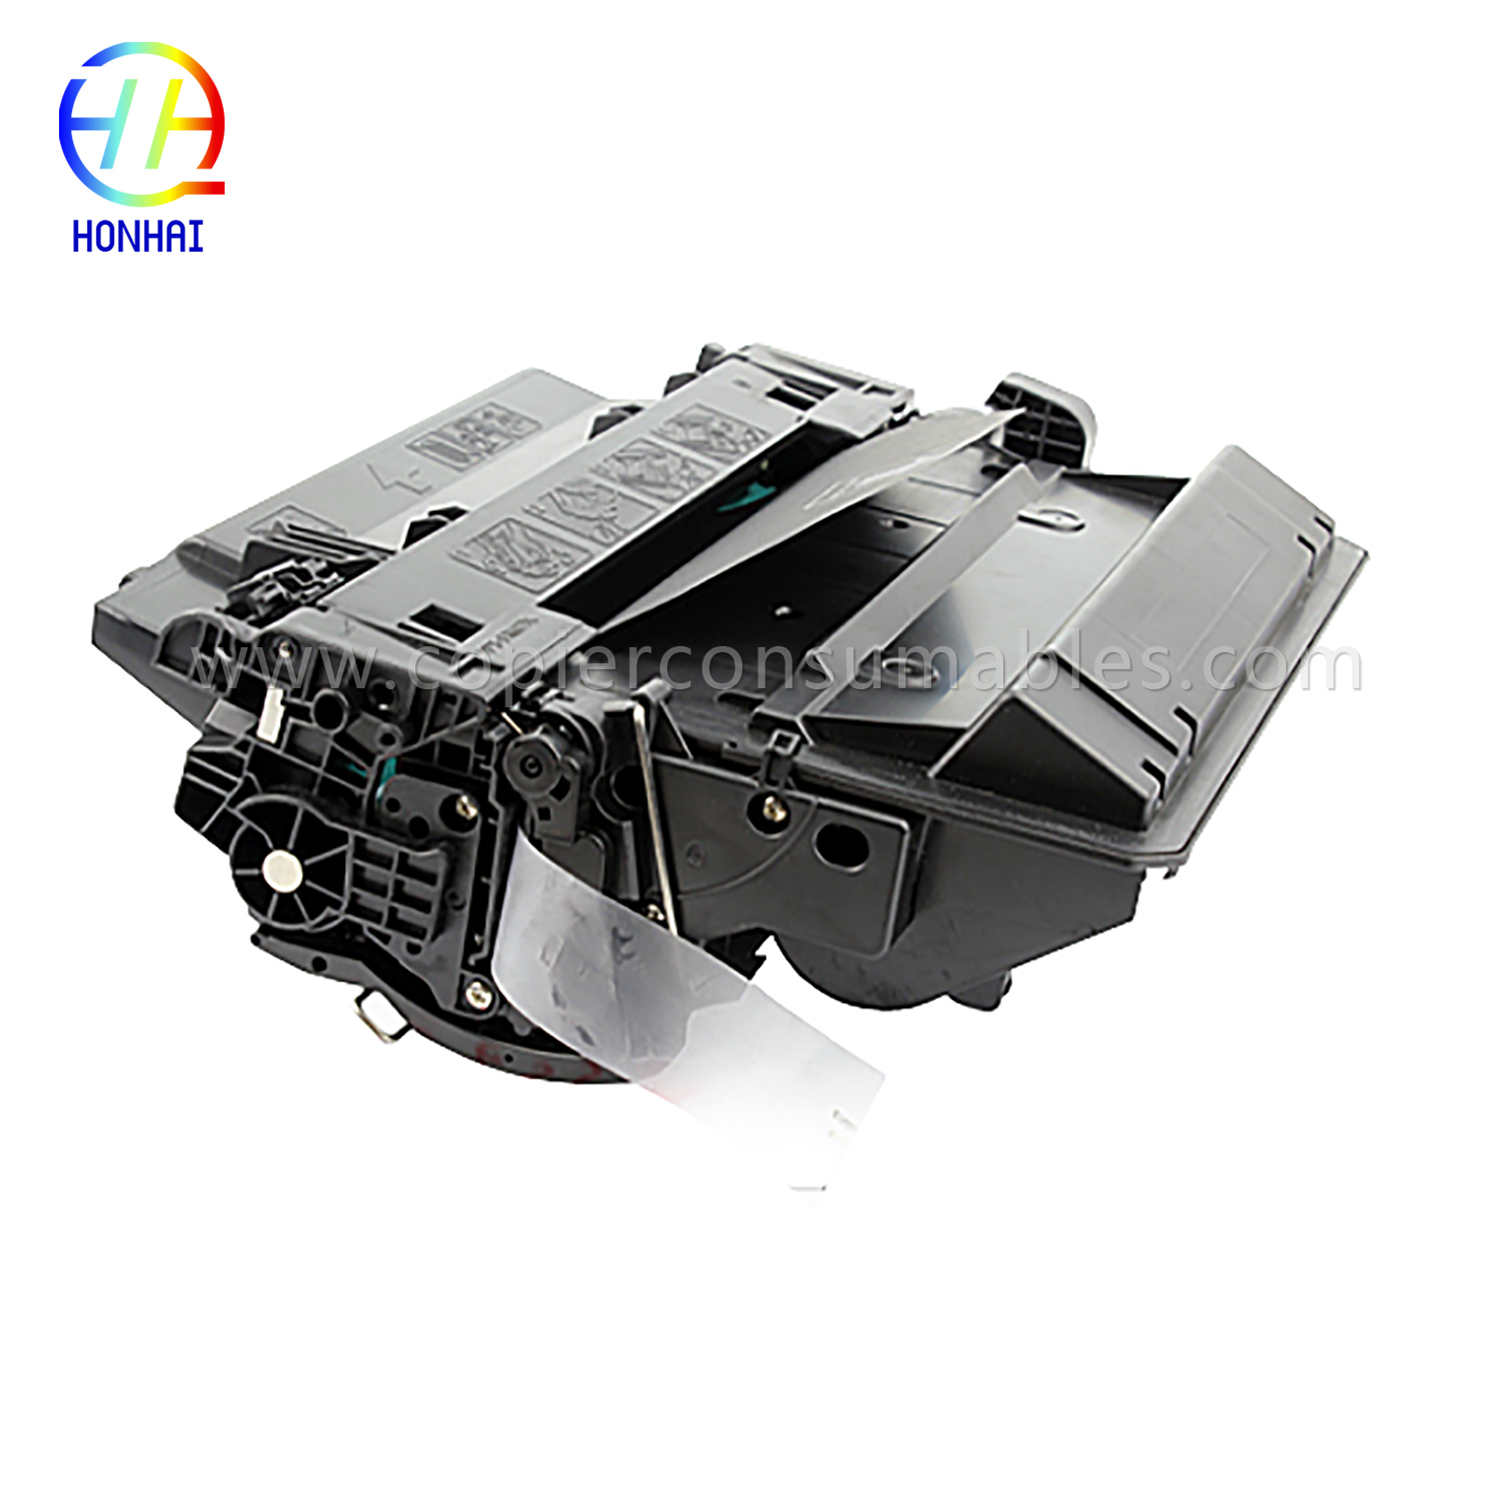 Өнгөт хорны хайрцаг HP LaserJet LaserJet Pro MFP M521dn Enterprise P3015 (CE255X) -1 (3) 拷贝